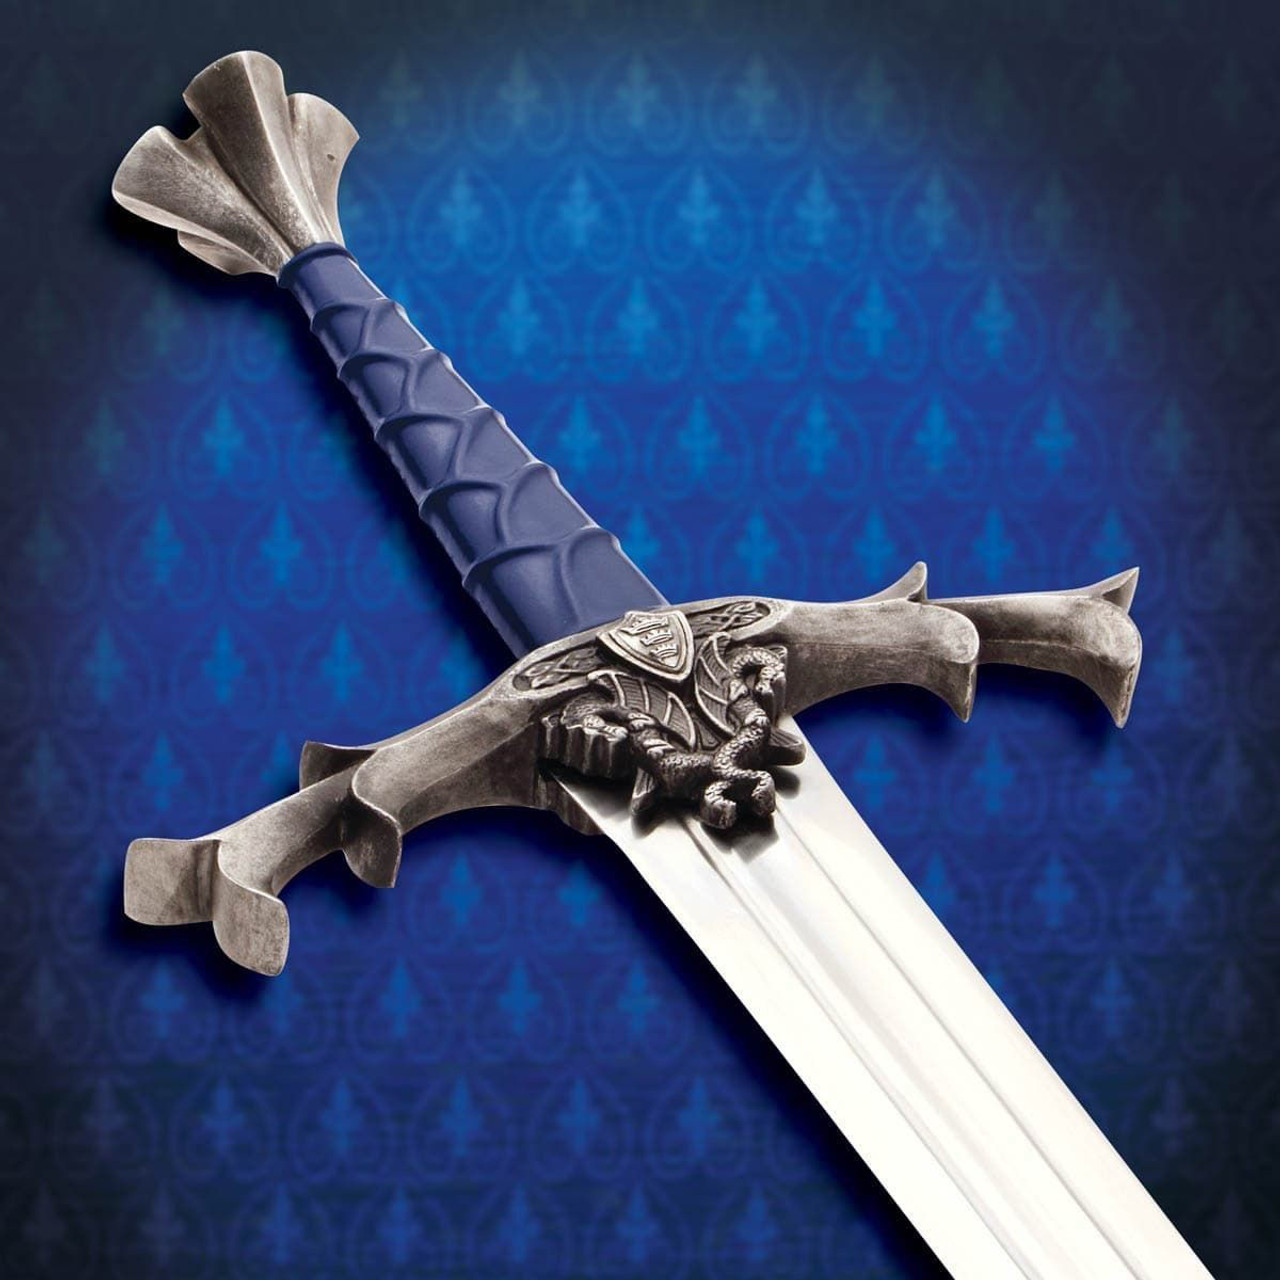 Excalibur the Legendary Sword